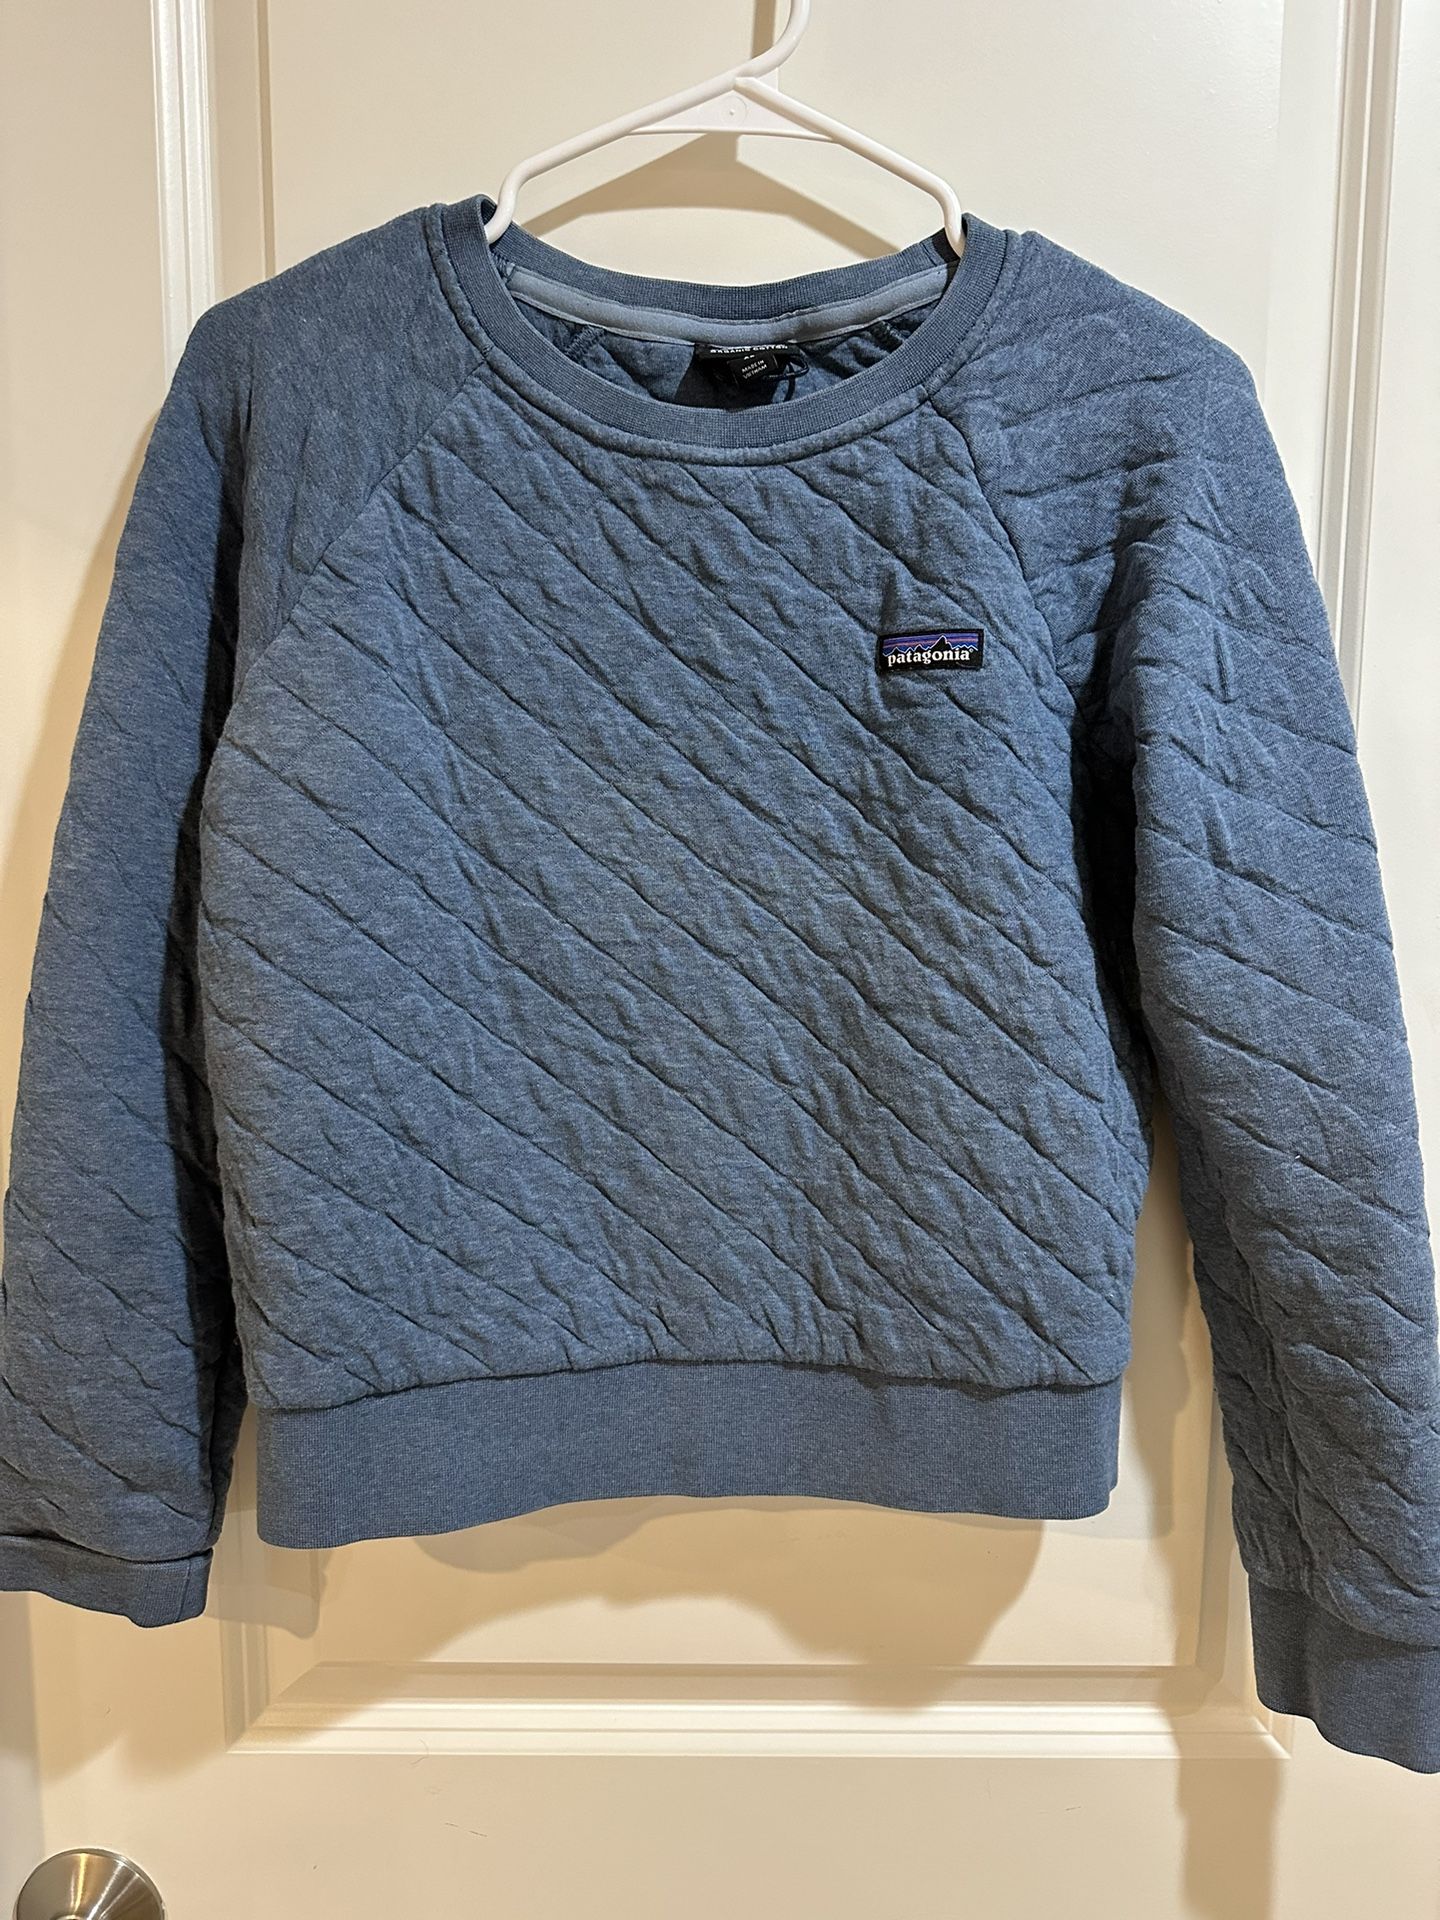 Patagonia Sweater 